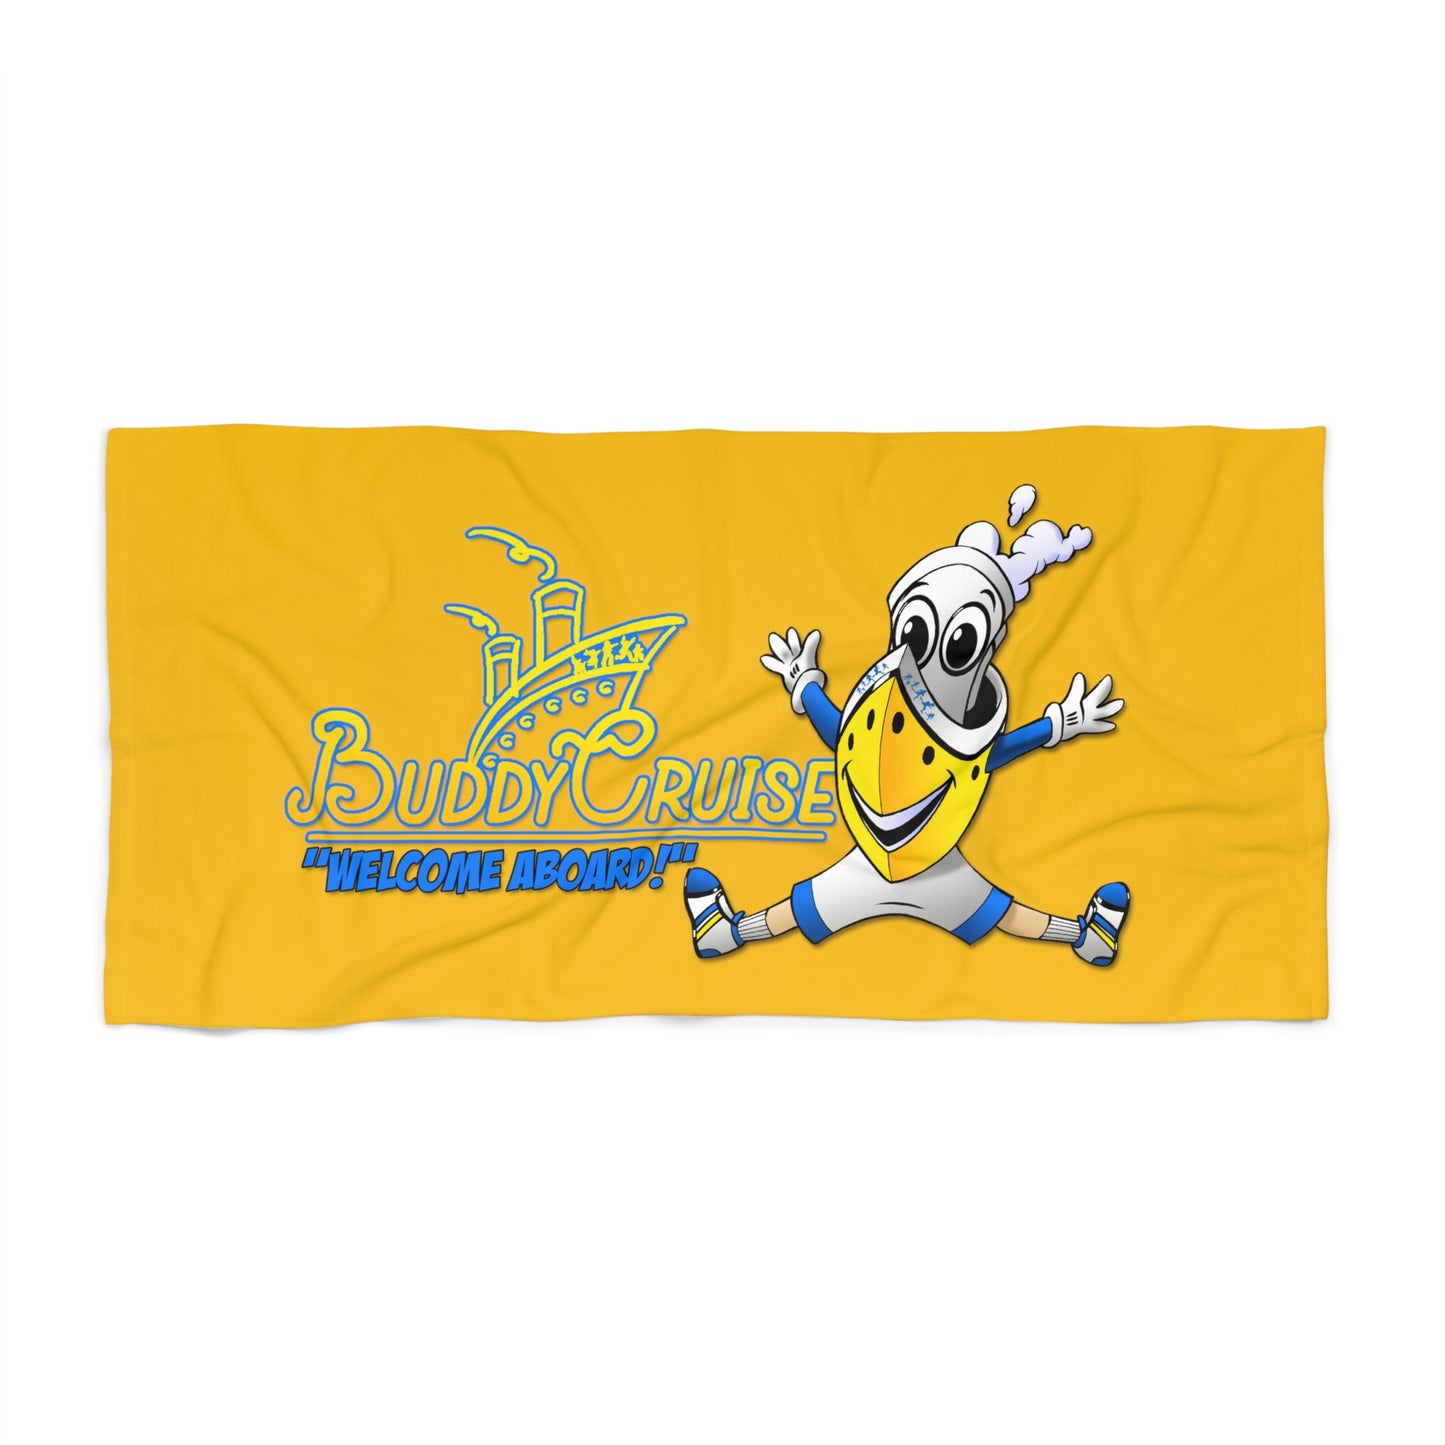 BUDDY CRUISE Sunny Yellow Beach Towel 30X60